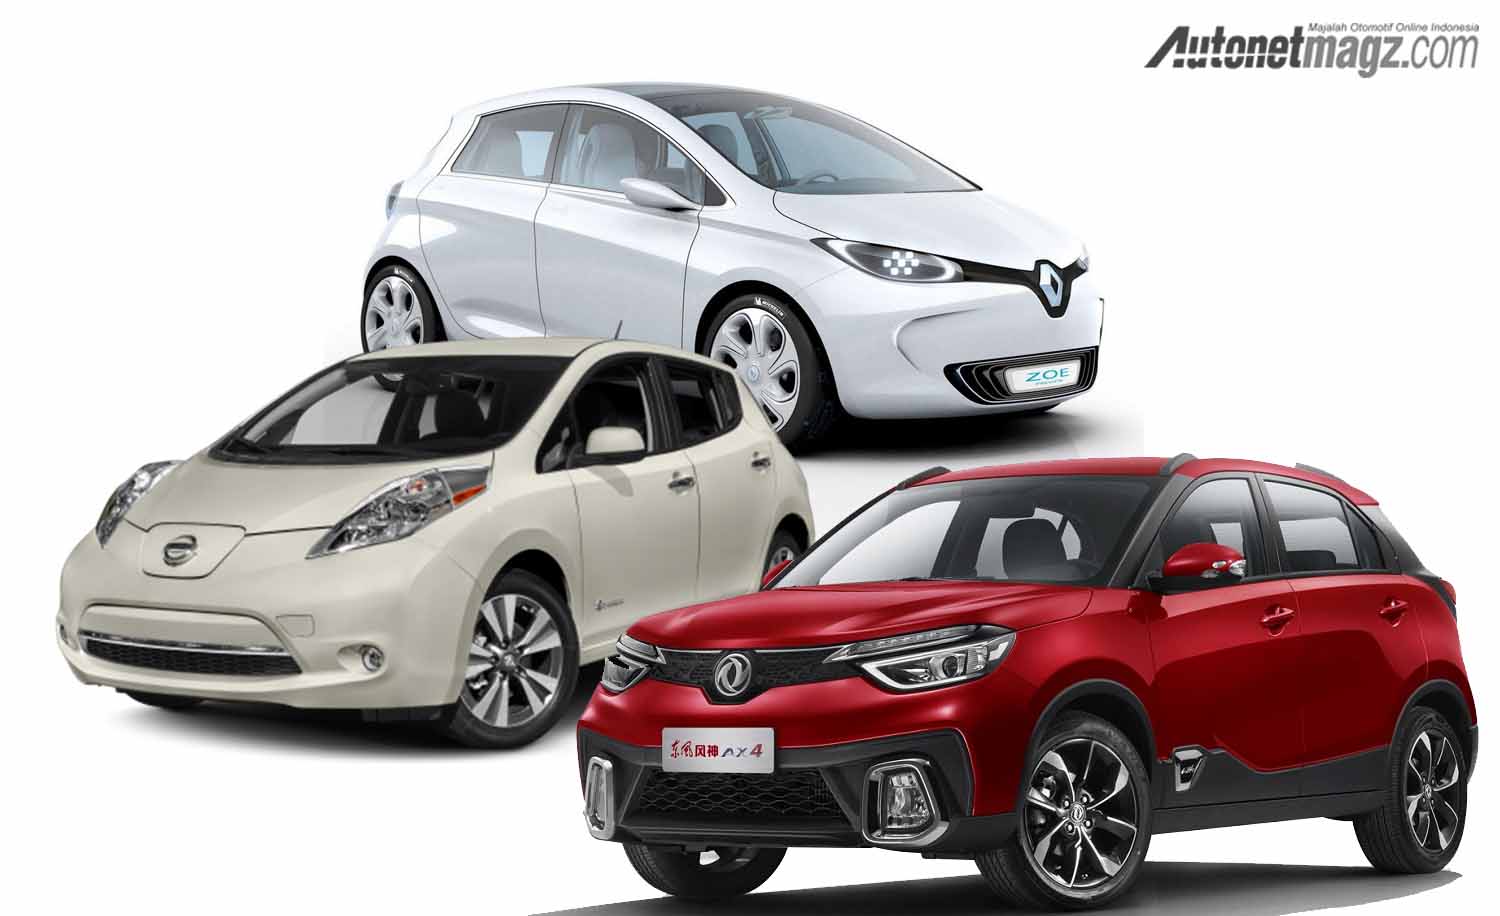 Berita, Dongfeng renault nissan eGT: Renault-Nissan Gandeng Dongfeng Untuk Produksi Crossover Listrik